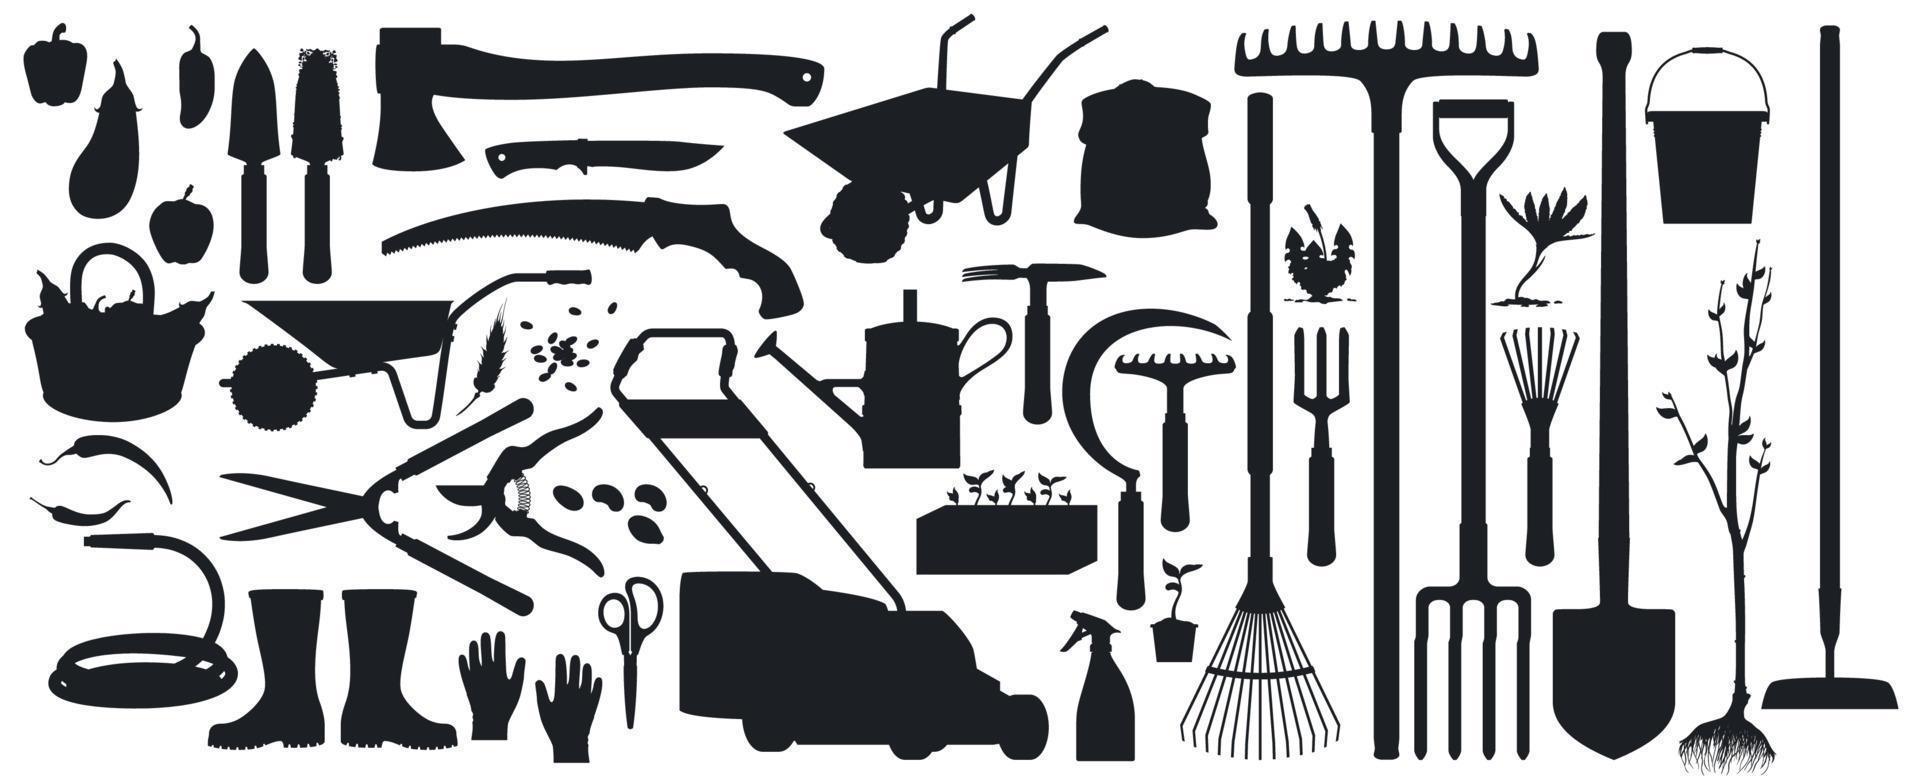 Gardening, farming tools, instruments silhouettes vector